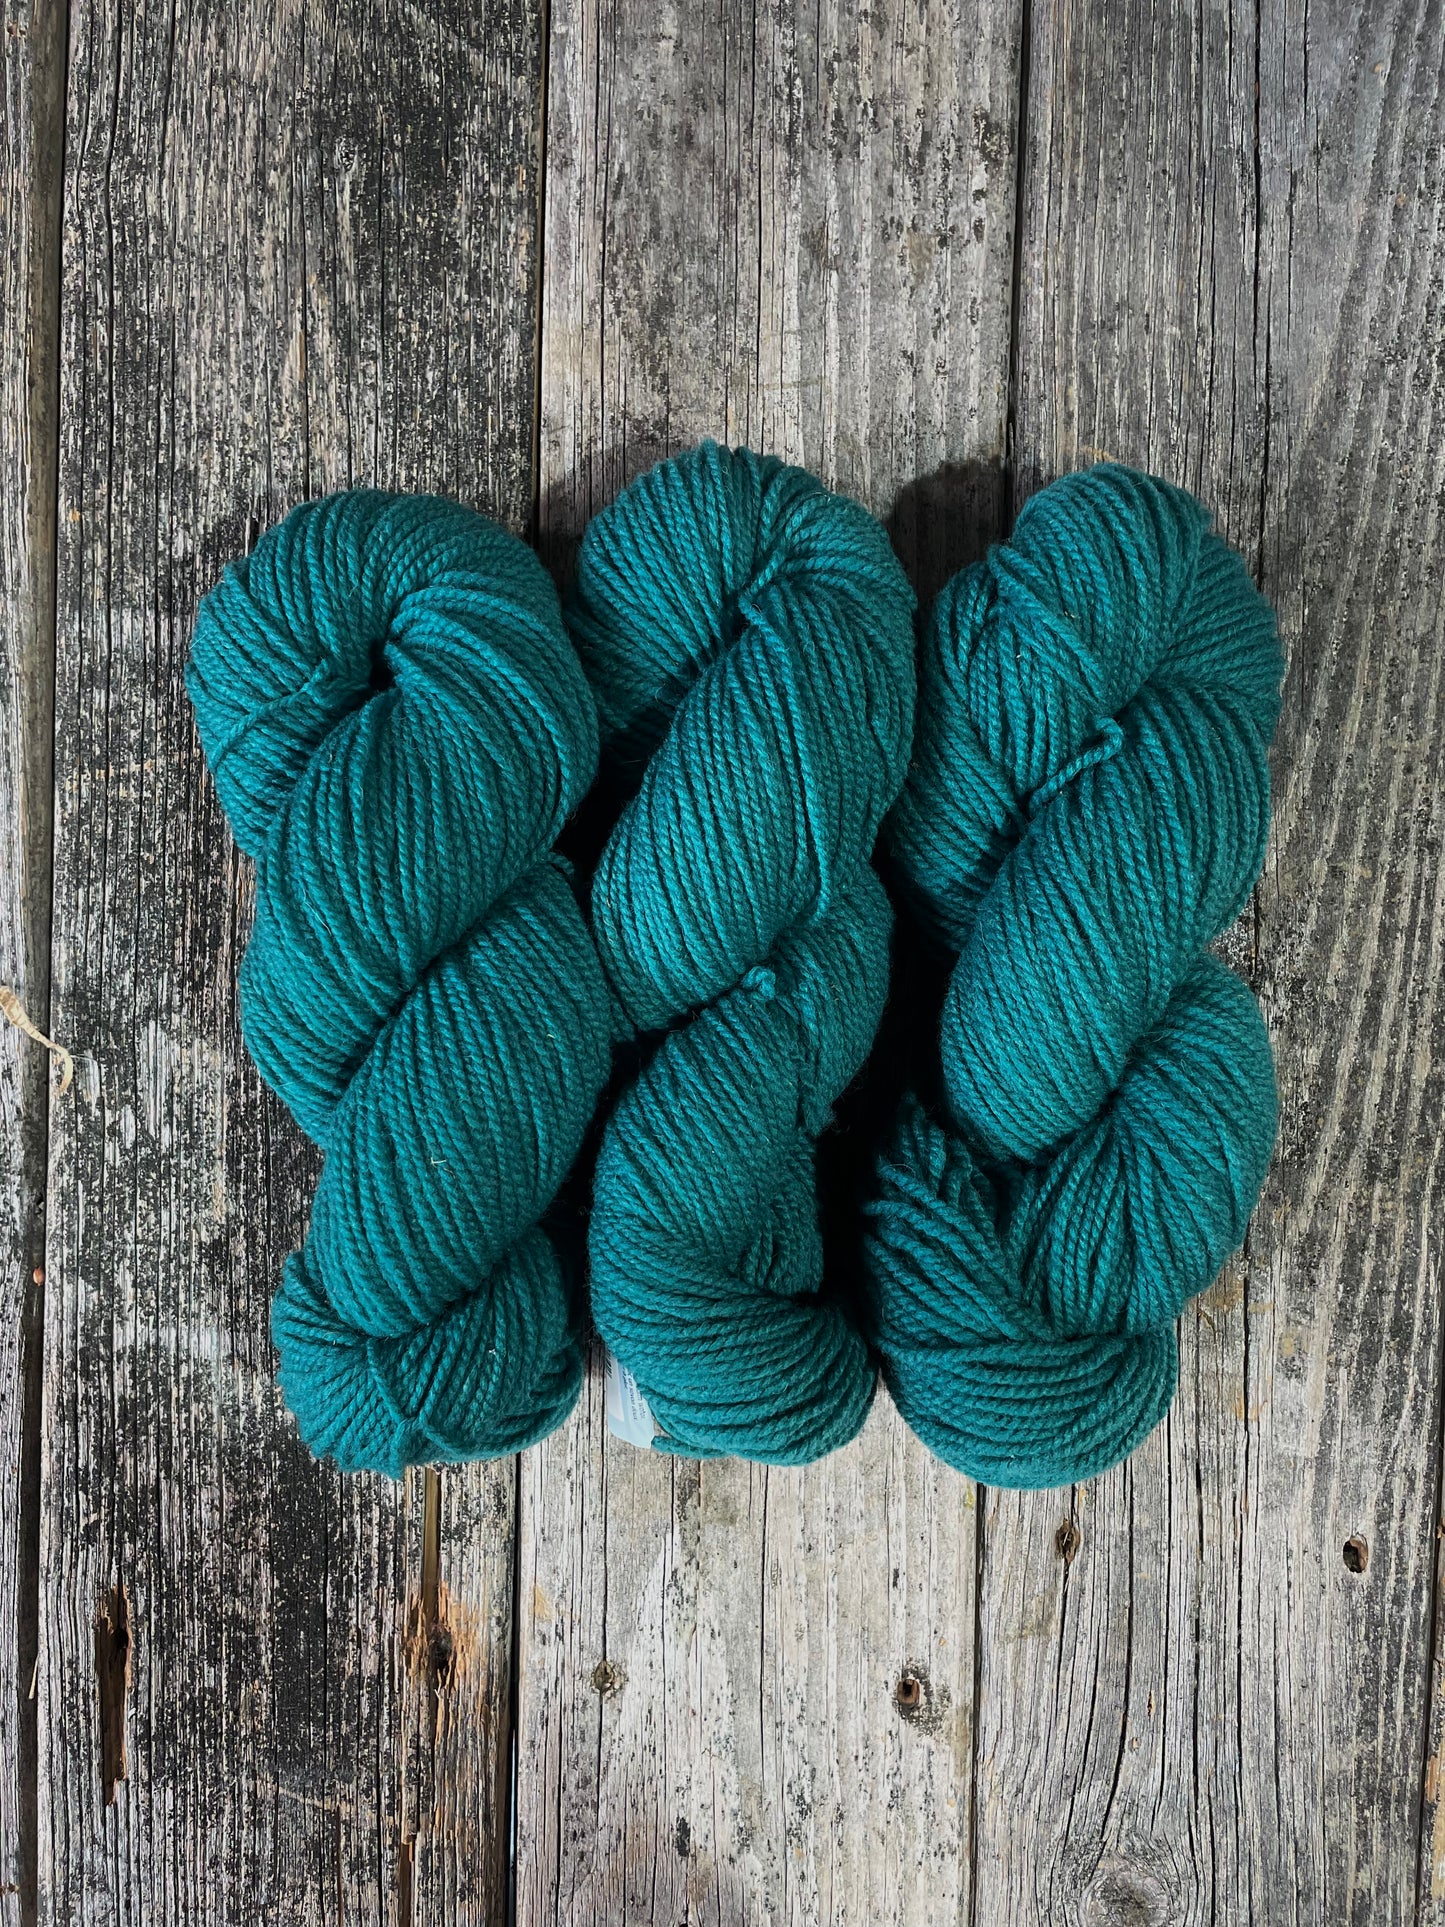 Briggs & Little Heritage: Jade - Maine Yarn & Fiber Supply